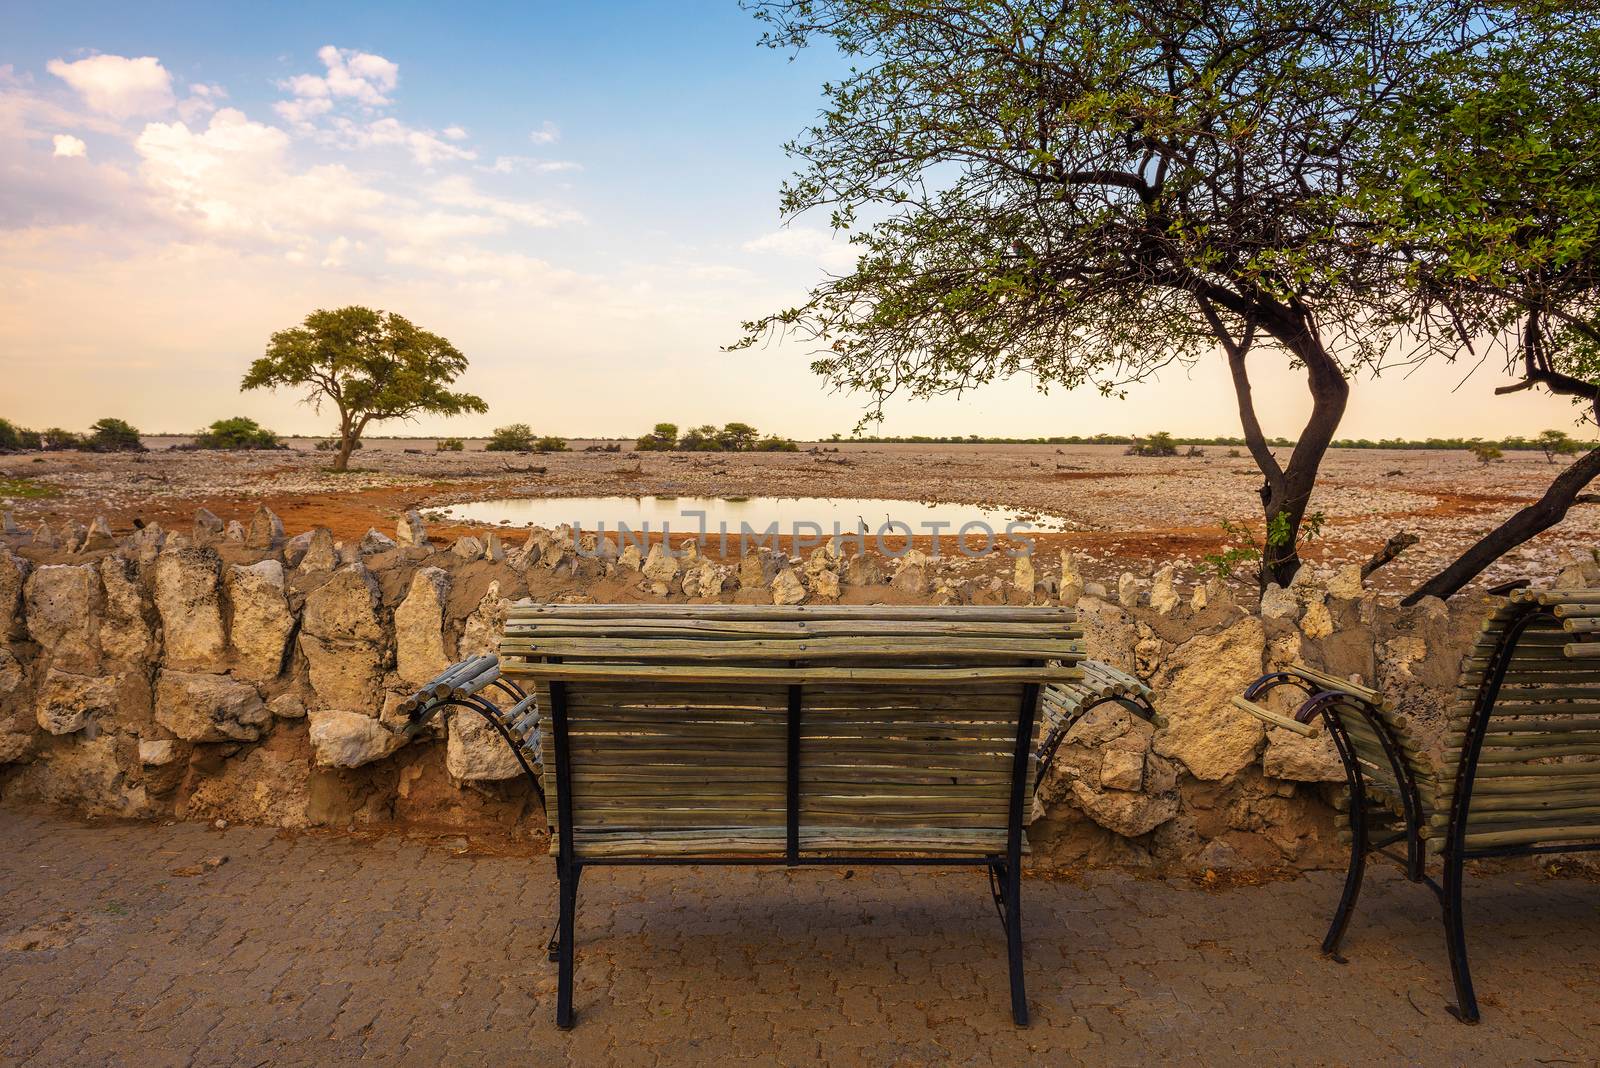 Bench at the waterhole of Okaukuejo Campsite in Etosha National Park, Namibia.